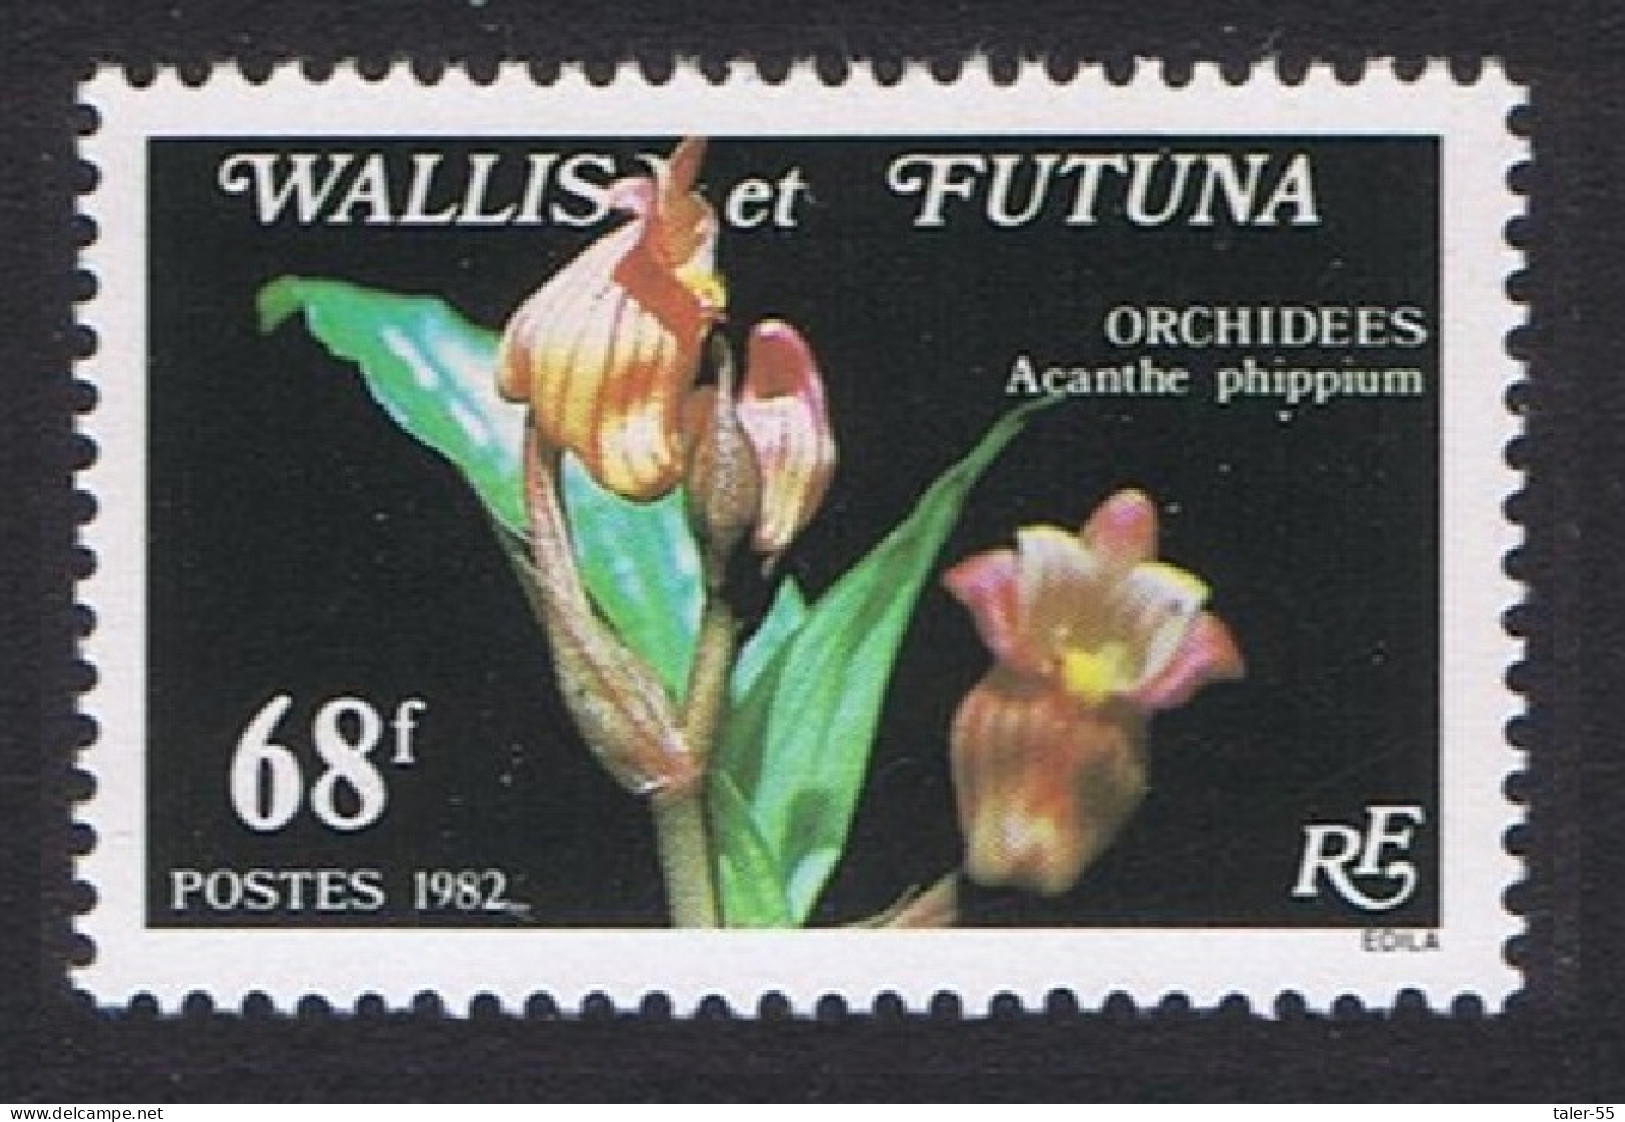 Wallis And Futuna Orchids Acanthe Phippium 68f 1982 MNH SG#397 Sc#284 - Nuovi